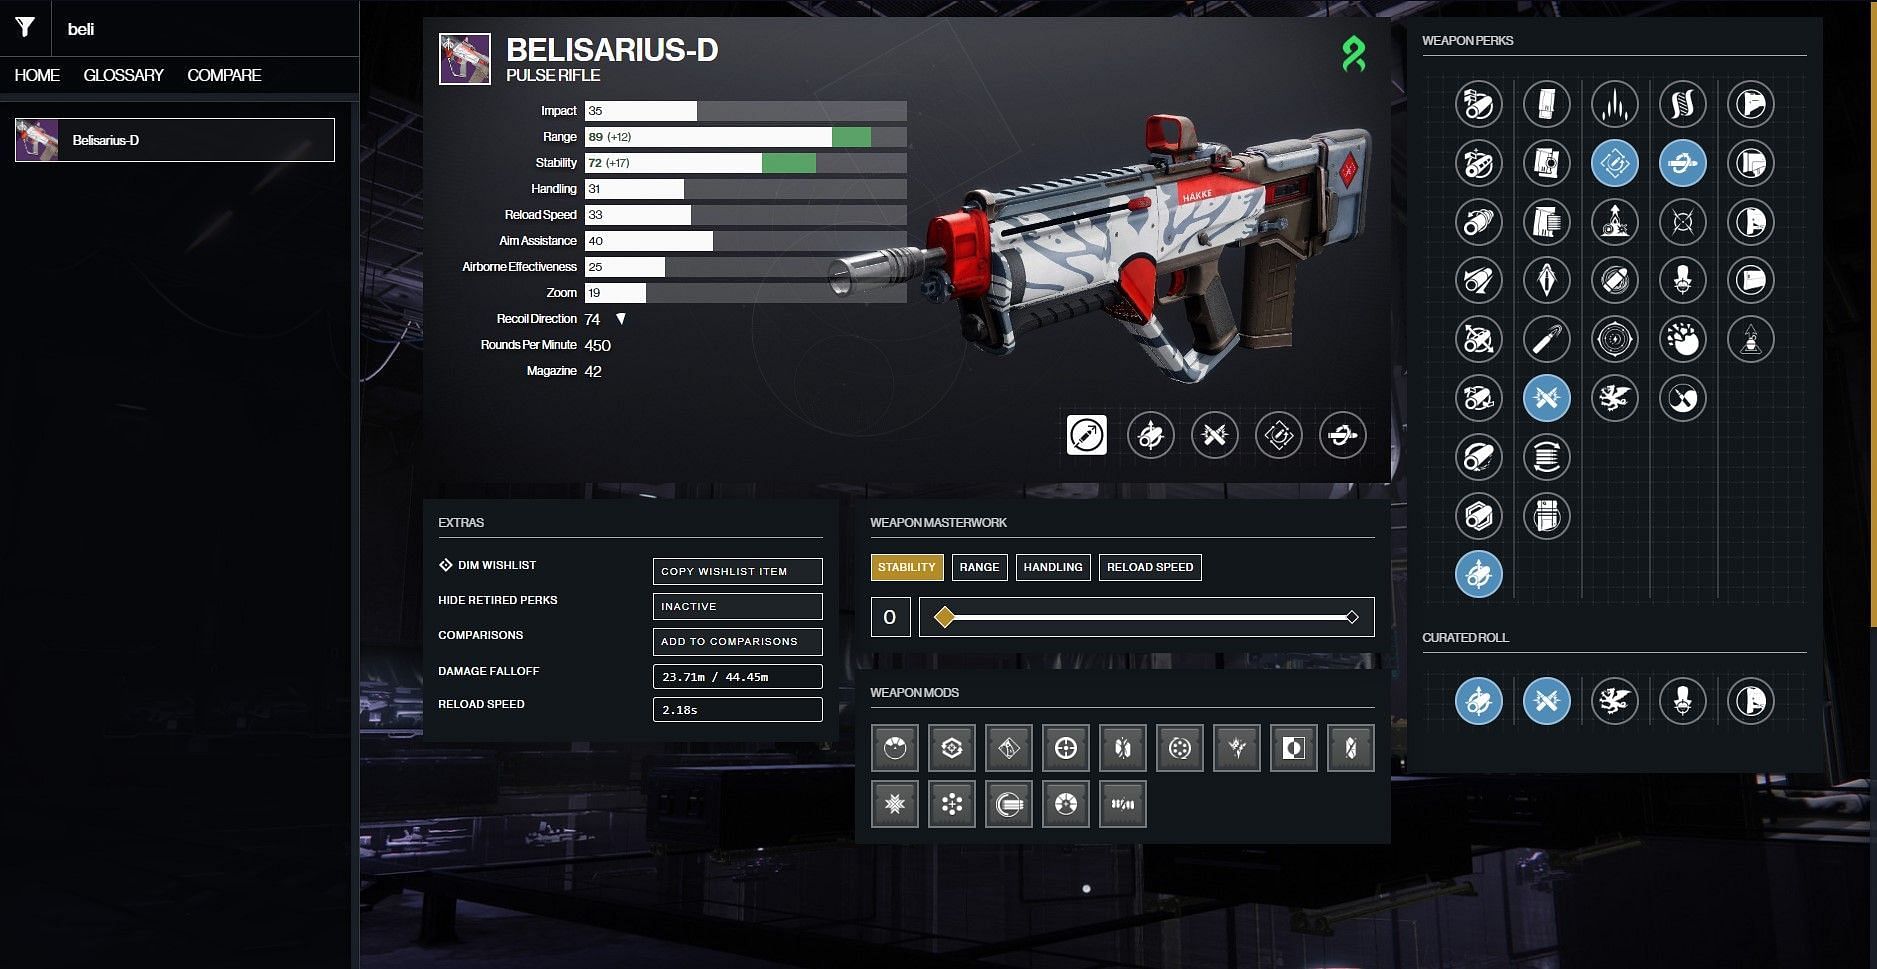 Belisarius-D PvP god roll in Destiny 2 (Image via D2Gunsmith)